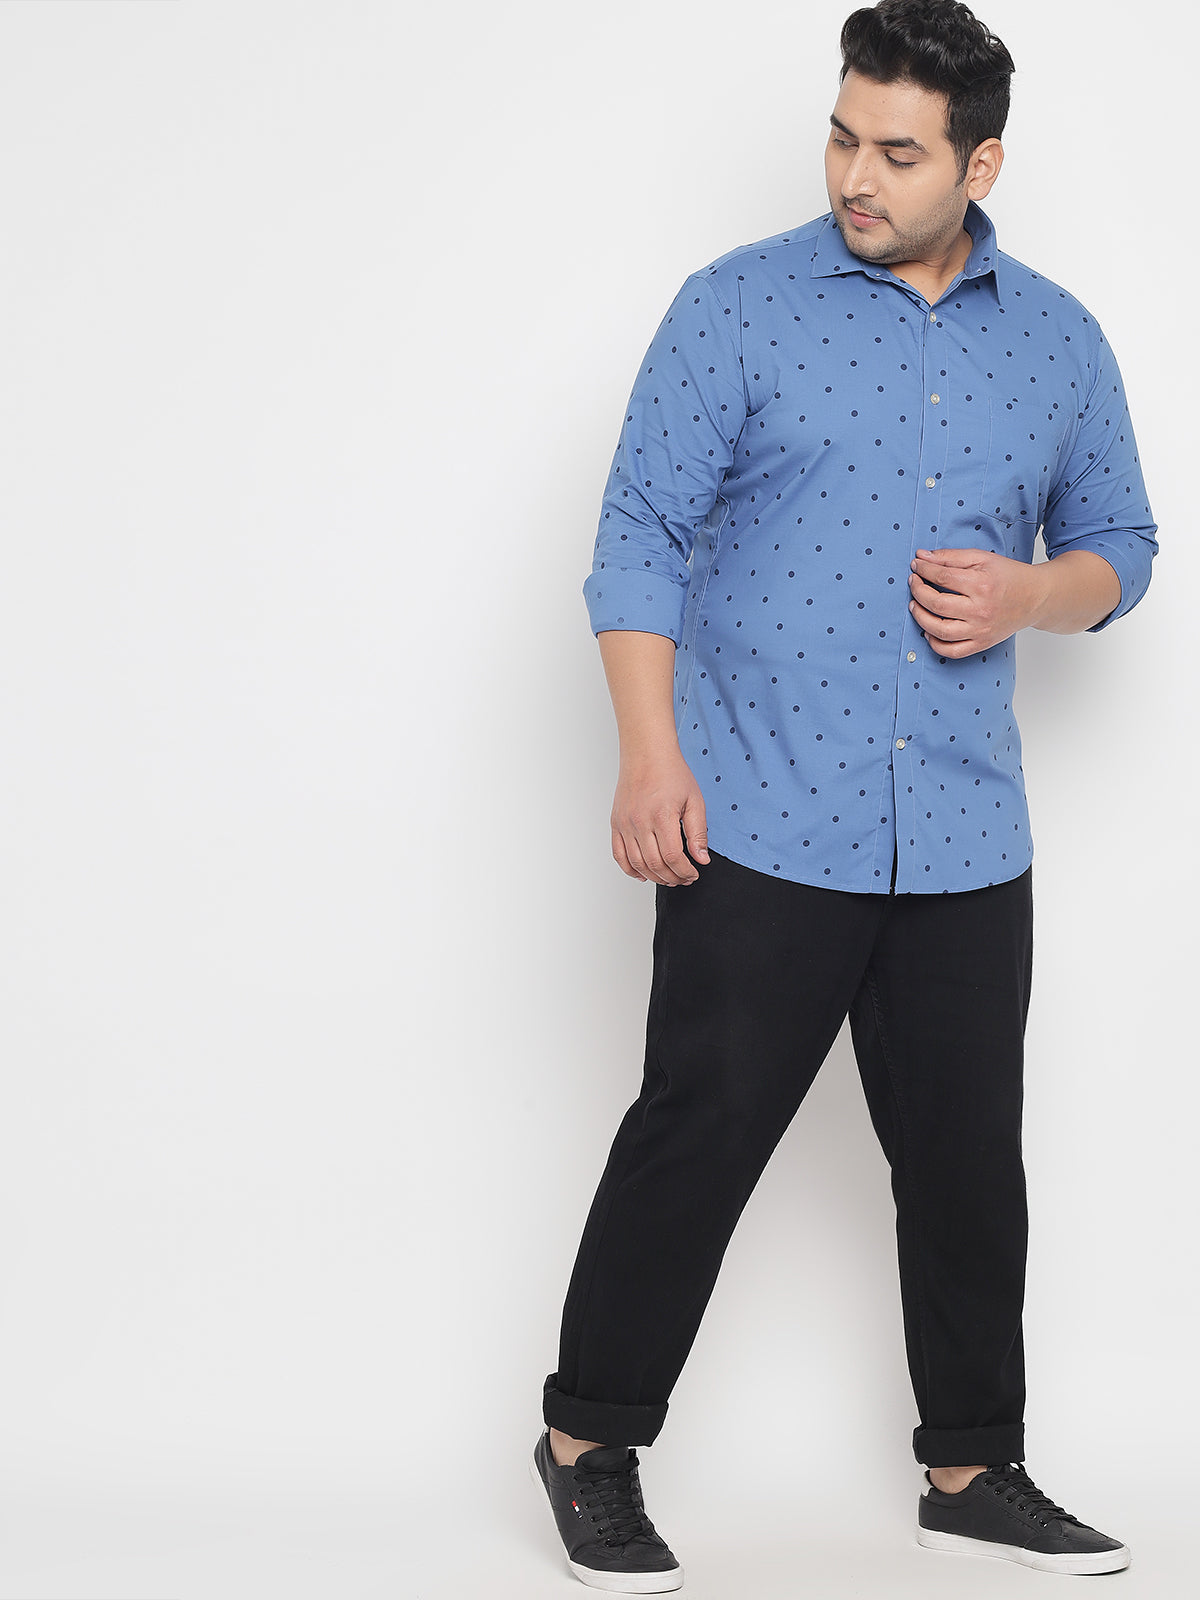 Blue Polka Dot Printed Shirt For Men Plus